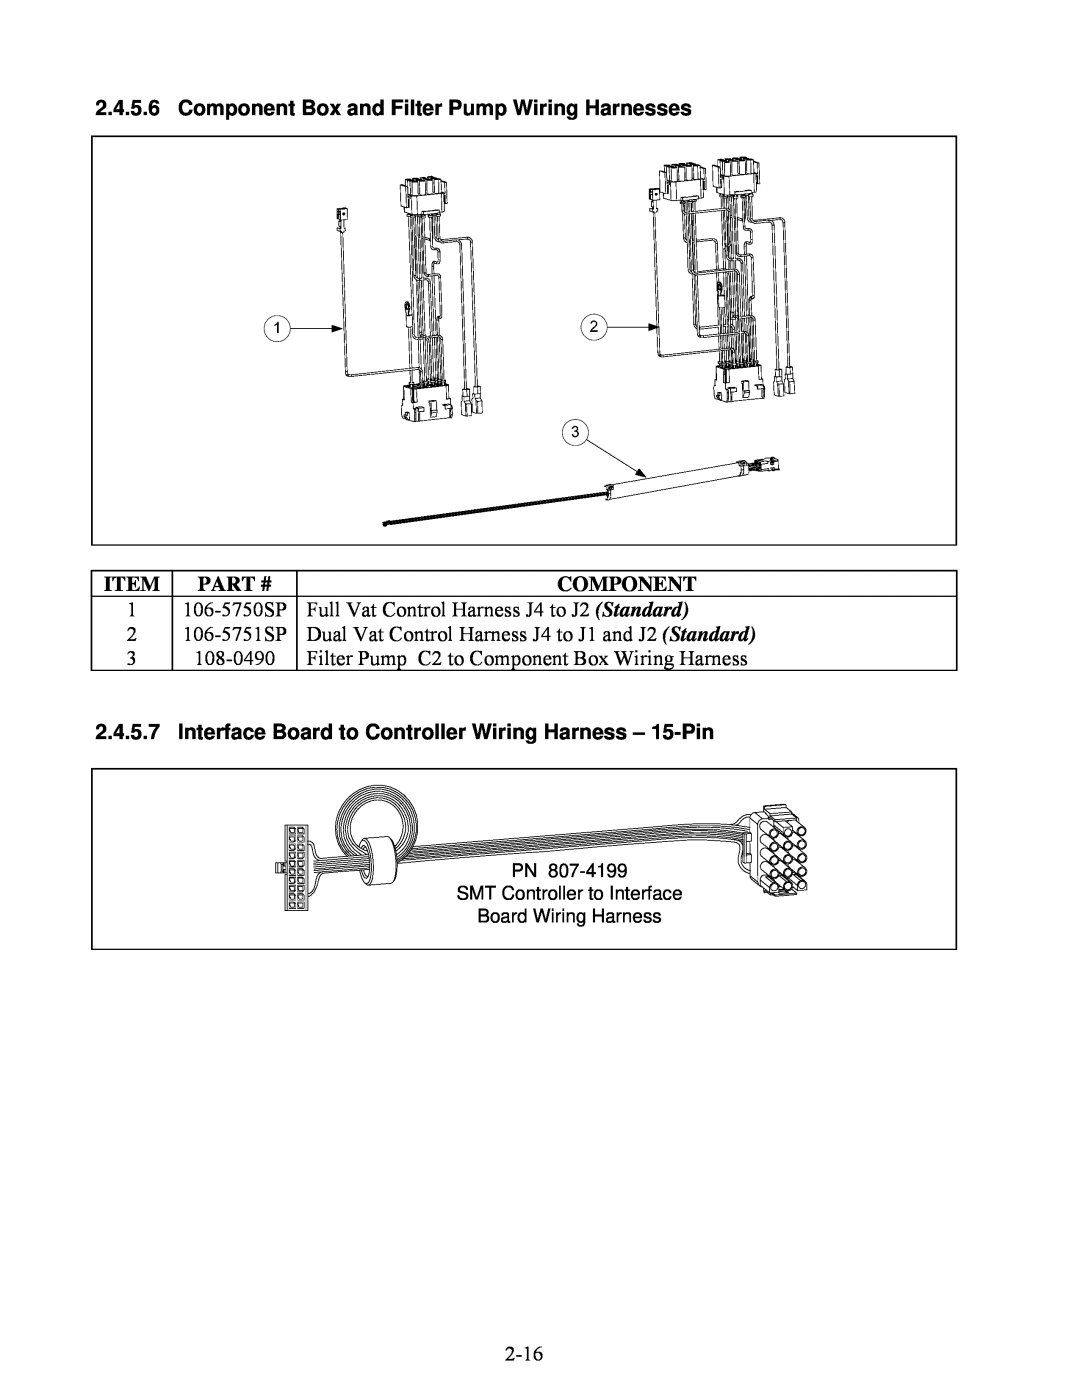 Frymaster BIELA14 manual Item, Part #, Component, Full Vat Control Harness J4 to J2 Standard, 2-16, 106-5750SP, 106-5751SP 